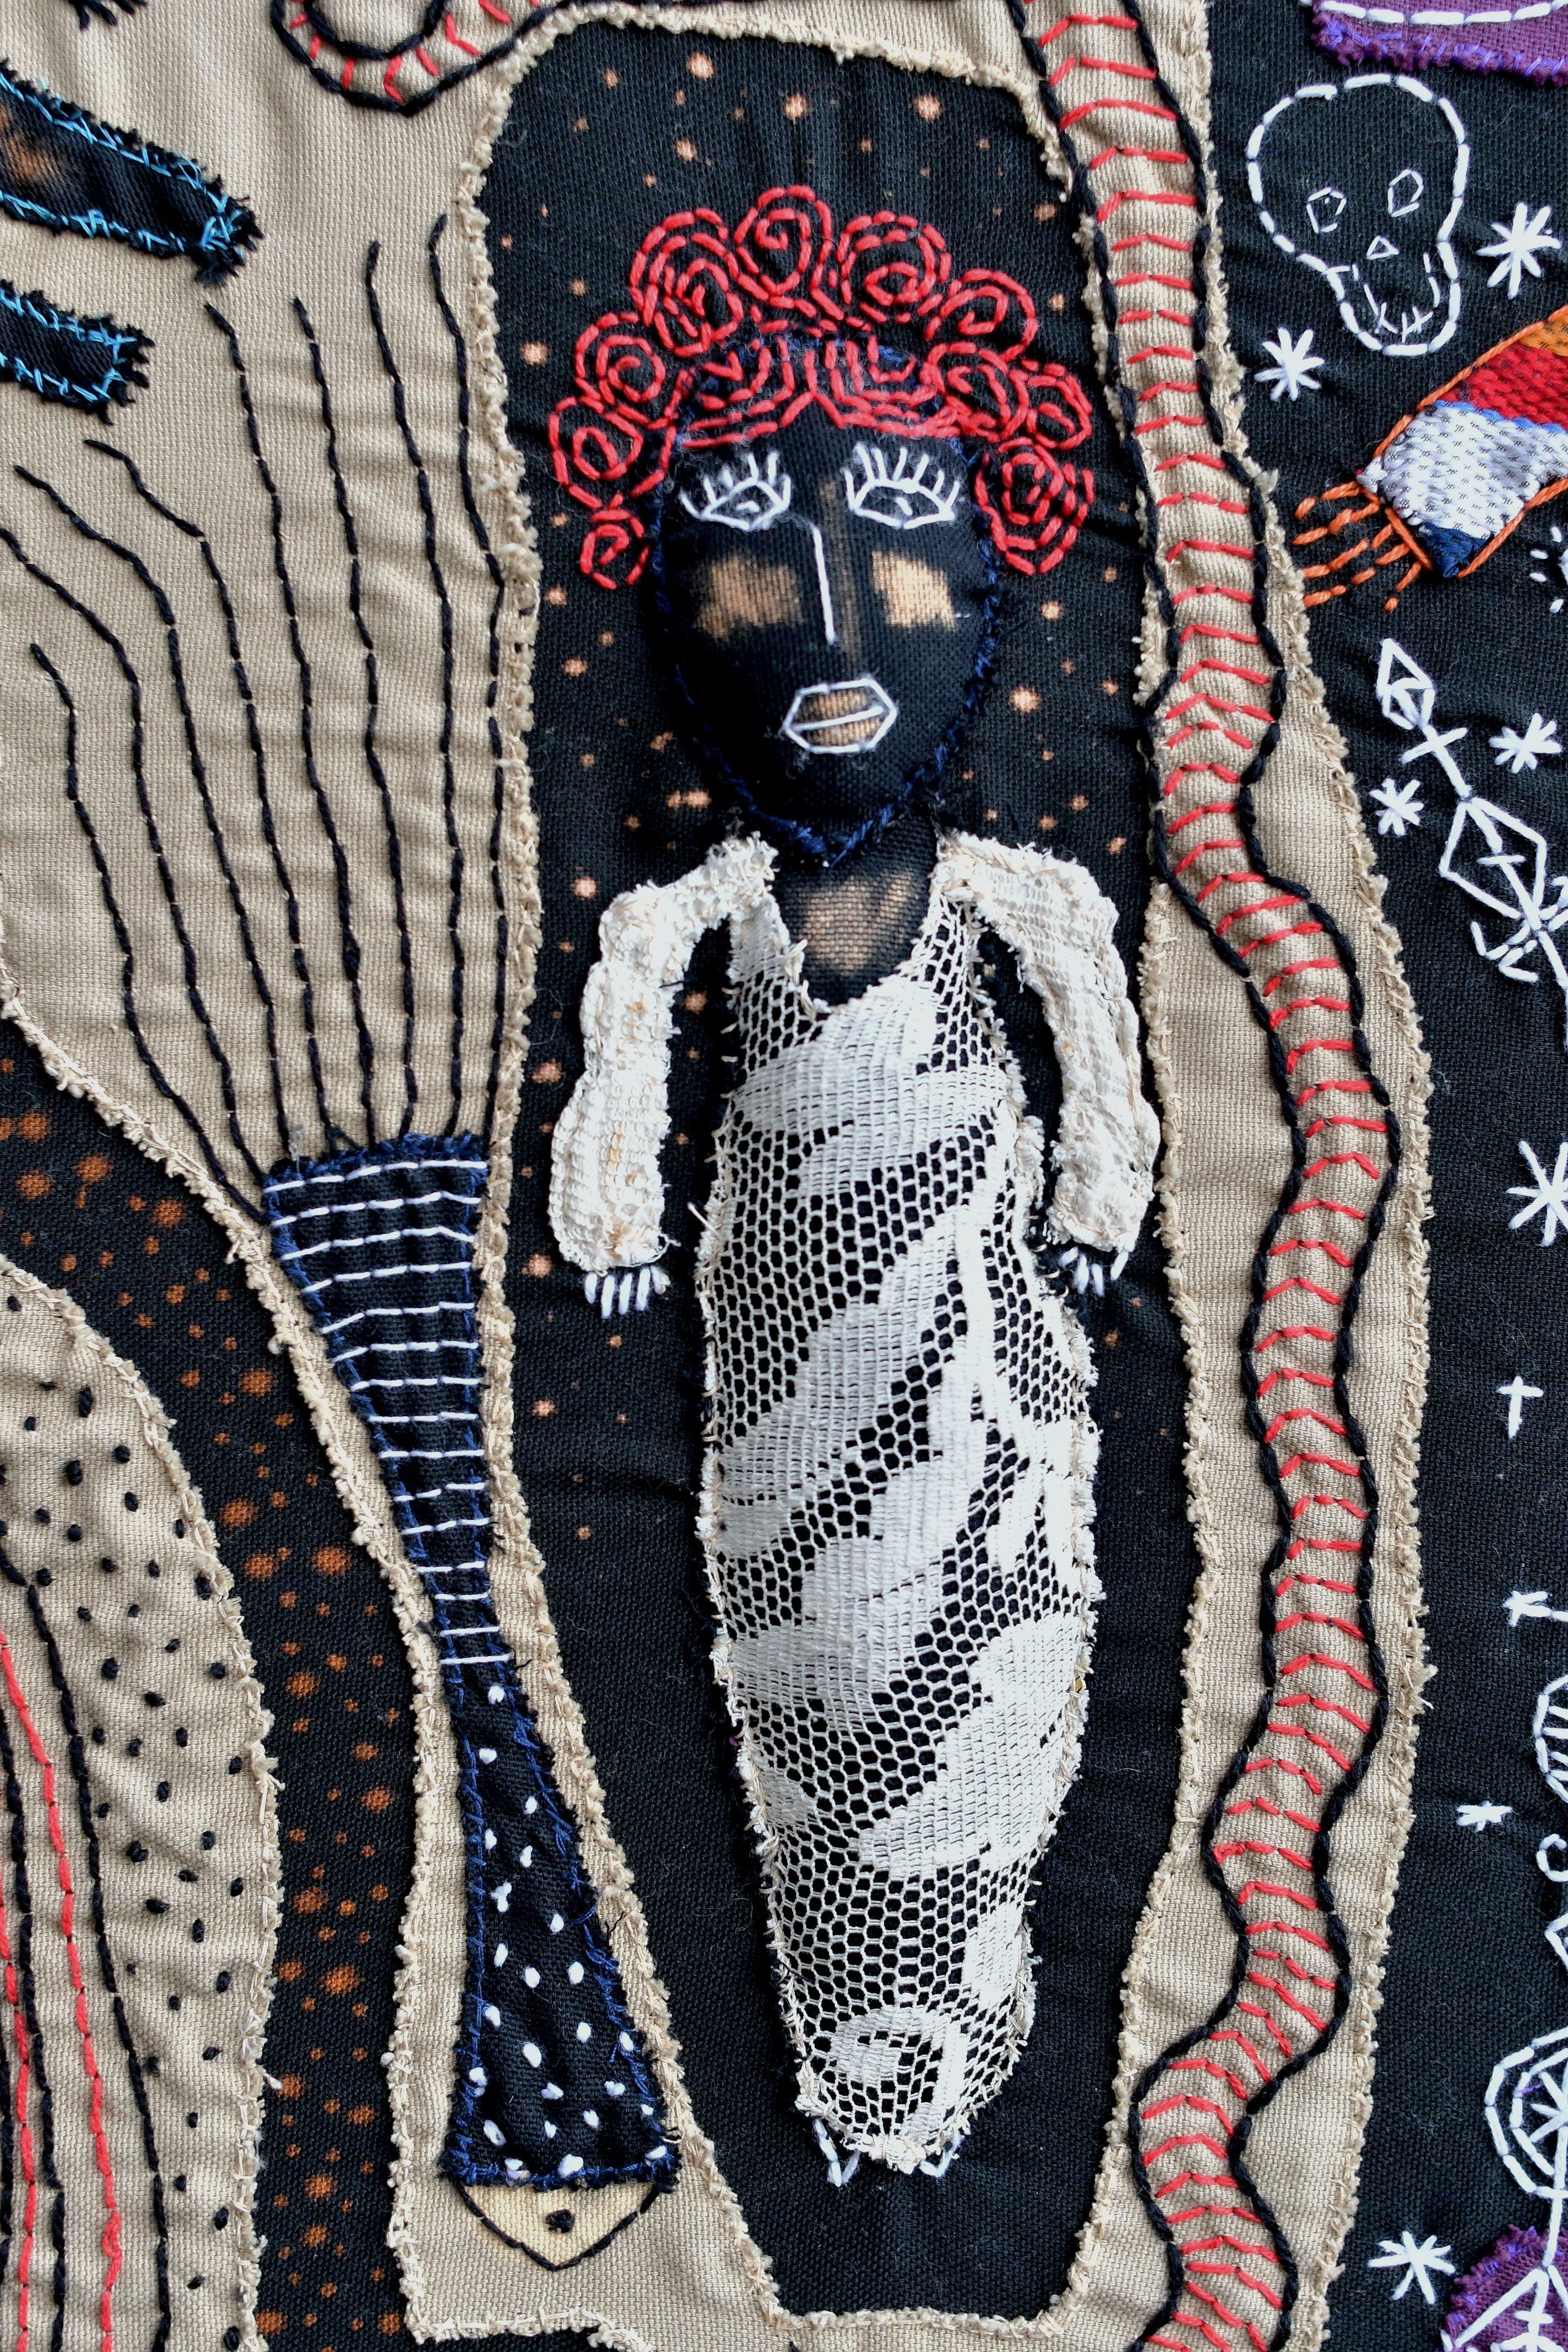 Abobo - Barbara d'Antuono, 21st Century Contempory textile art hand sewn - Contemporary Art by Barbara d' Antuono